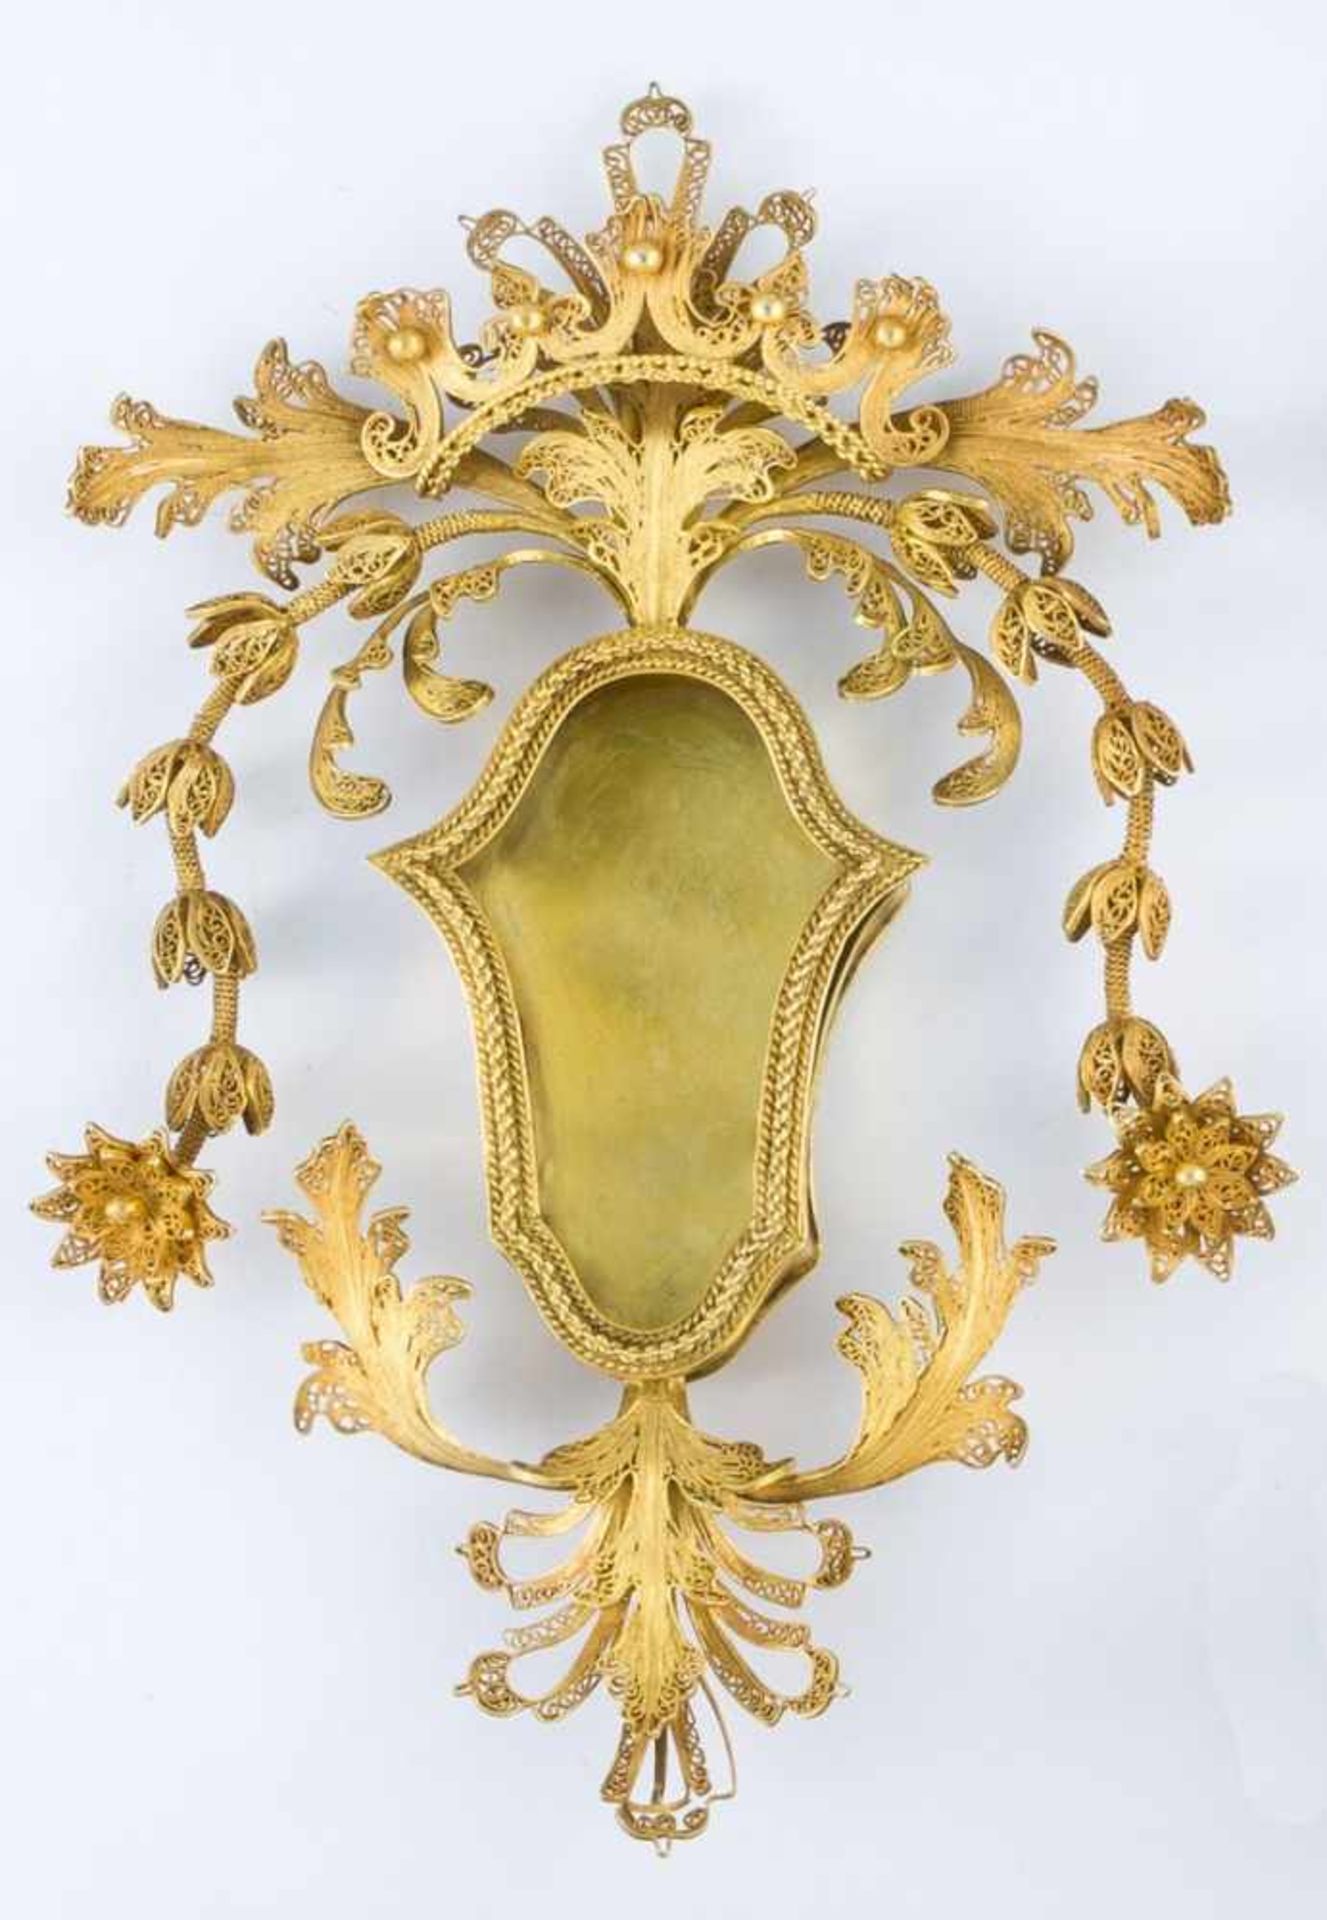 Reliquien-Rahmen. Silber, vergoldet. Kartuschenförmiges Reliquiengehäuse, umgeben von filigranen